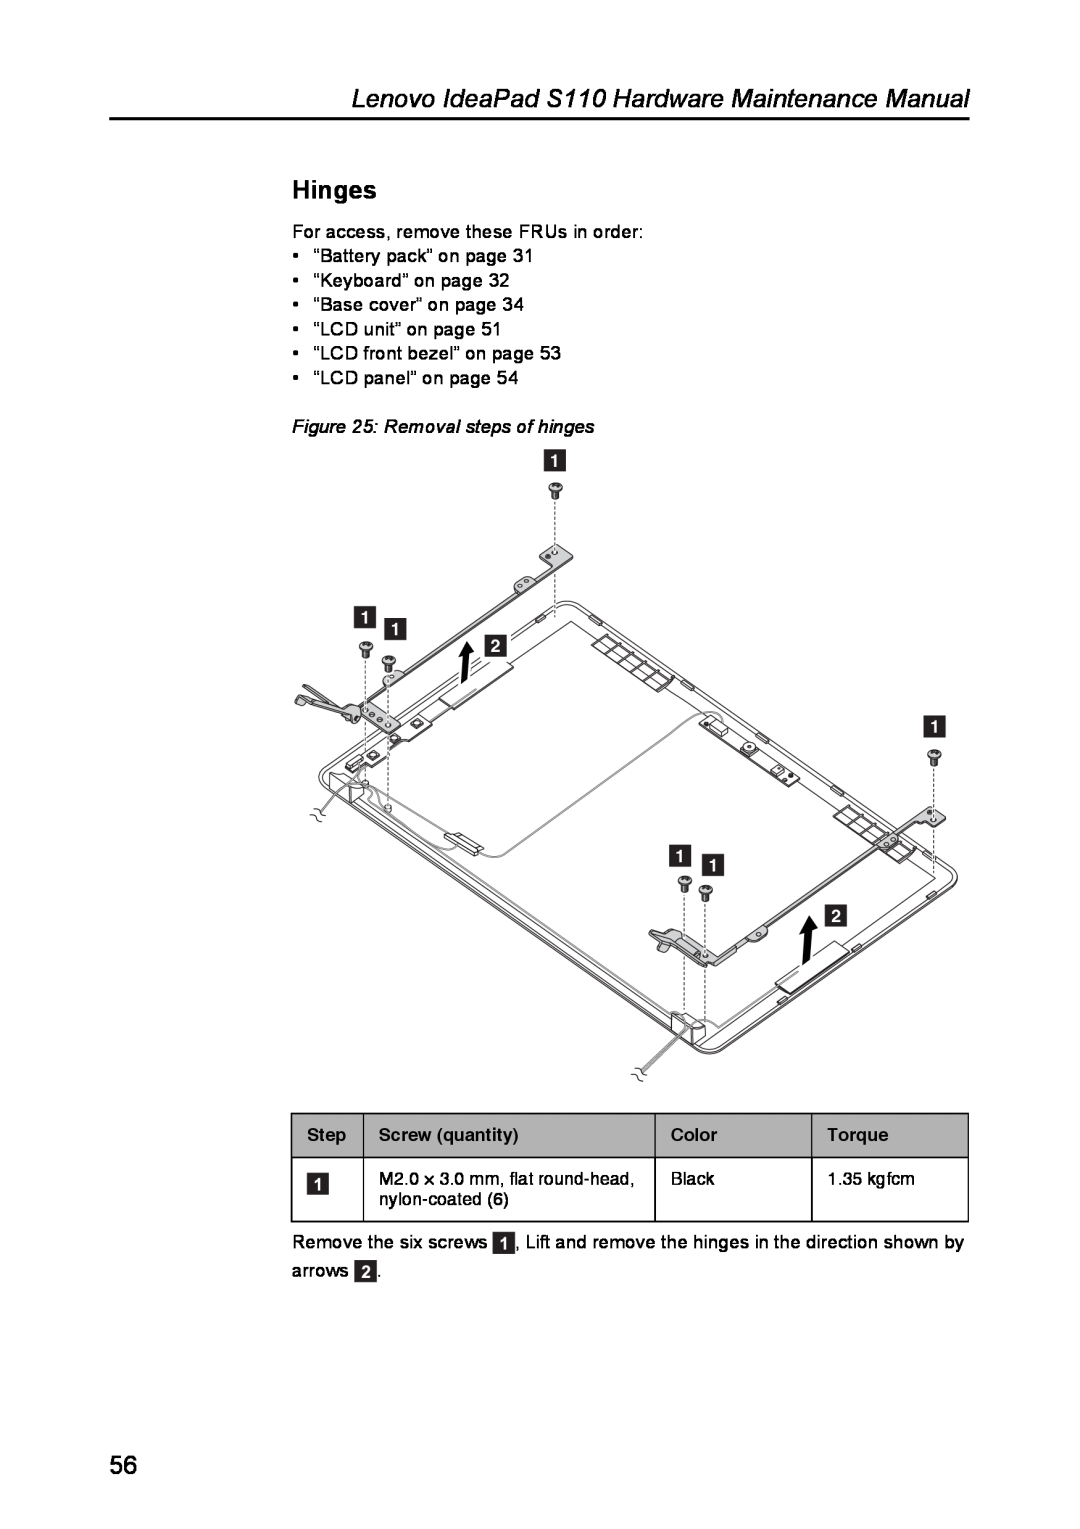 Lenovo manual Hinges, Removal steps of hinges, Lenovo IdeaPad S110 Hardware Maintenance Manual 